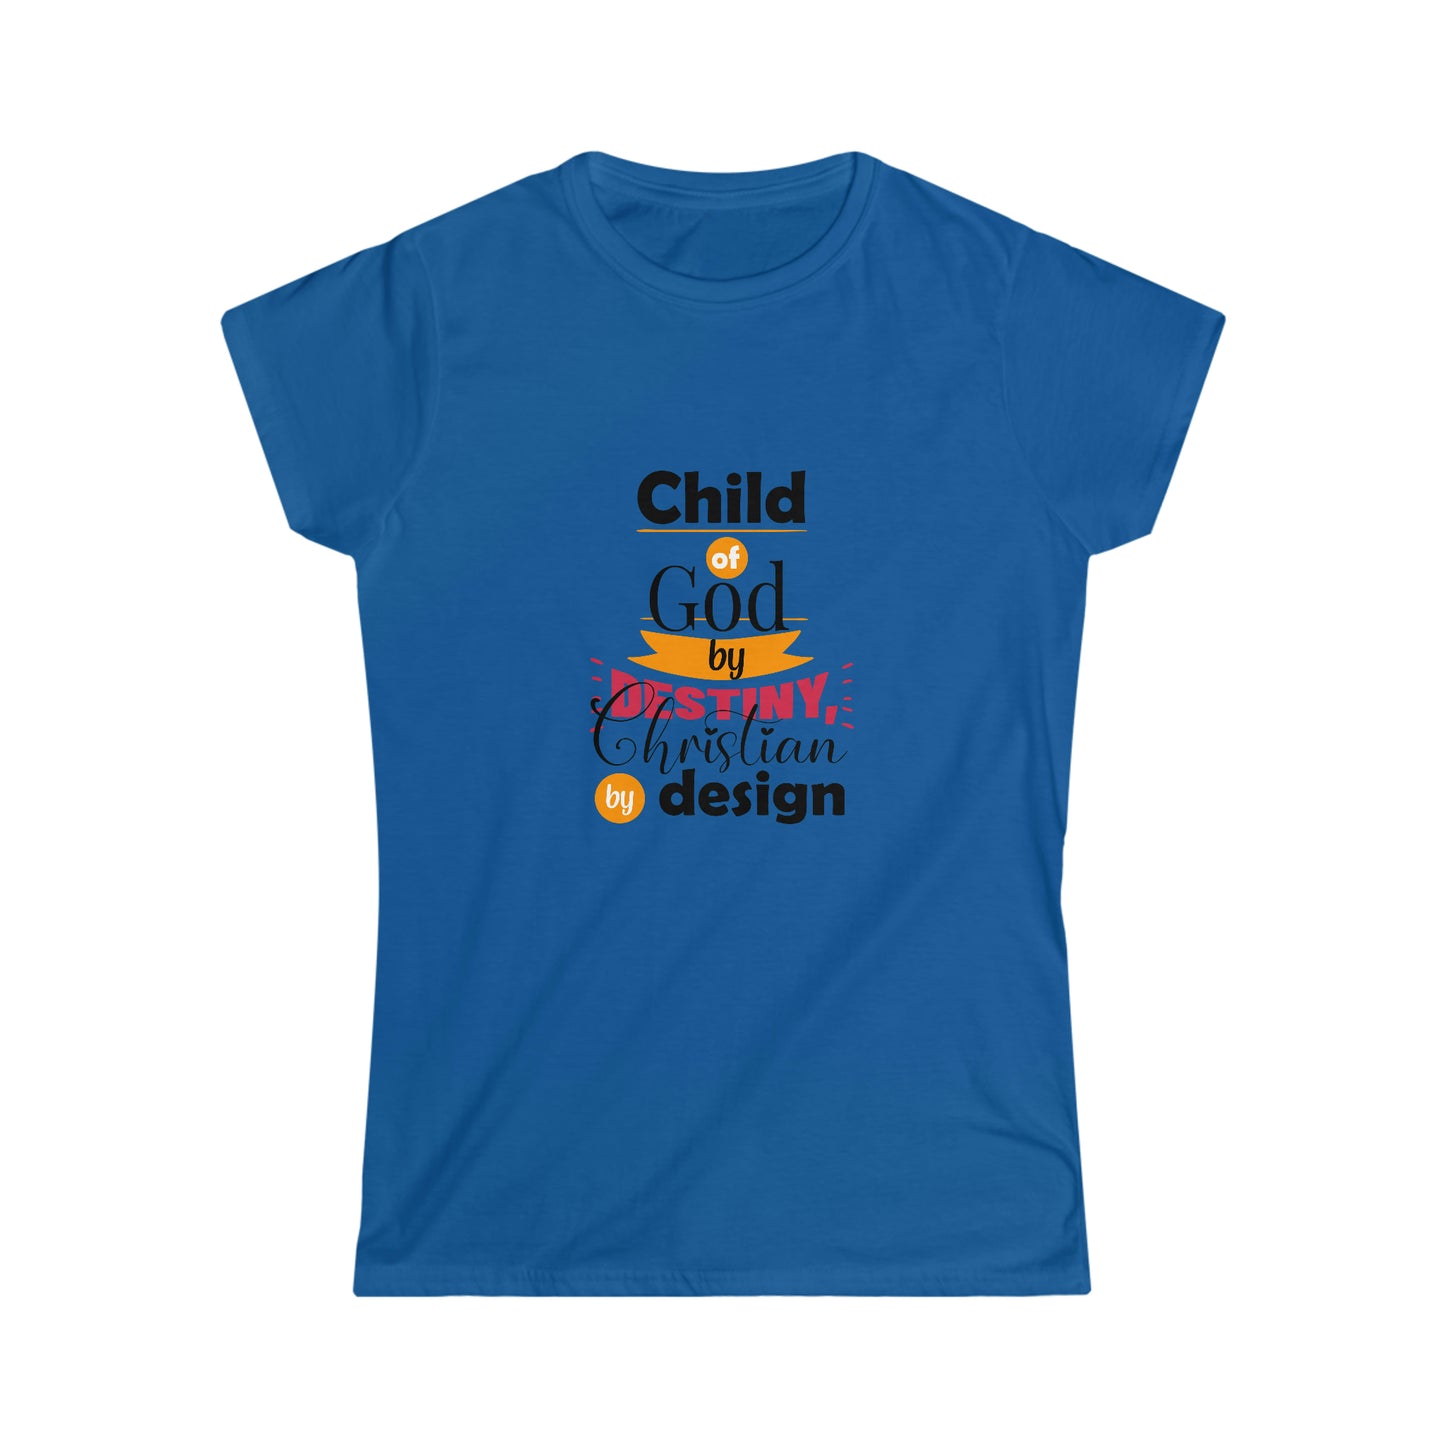 Child Of God By Destiny Christian By Design Women's T-shirt